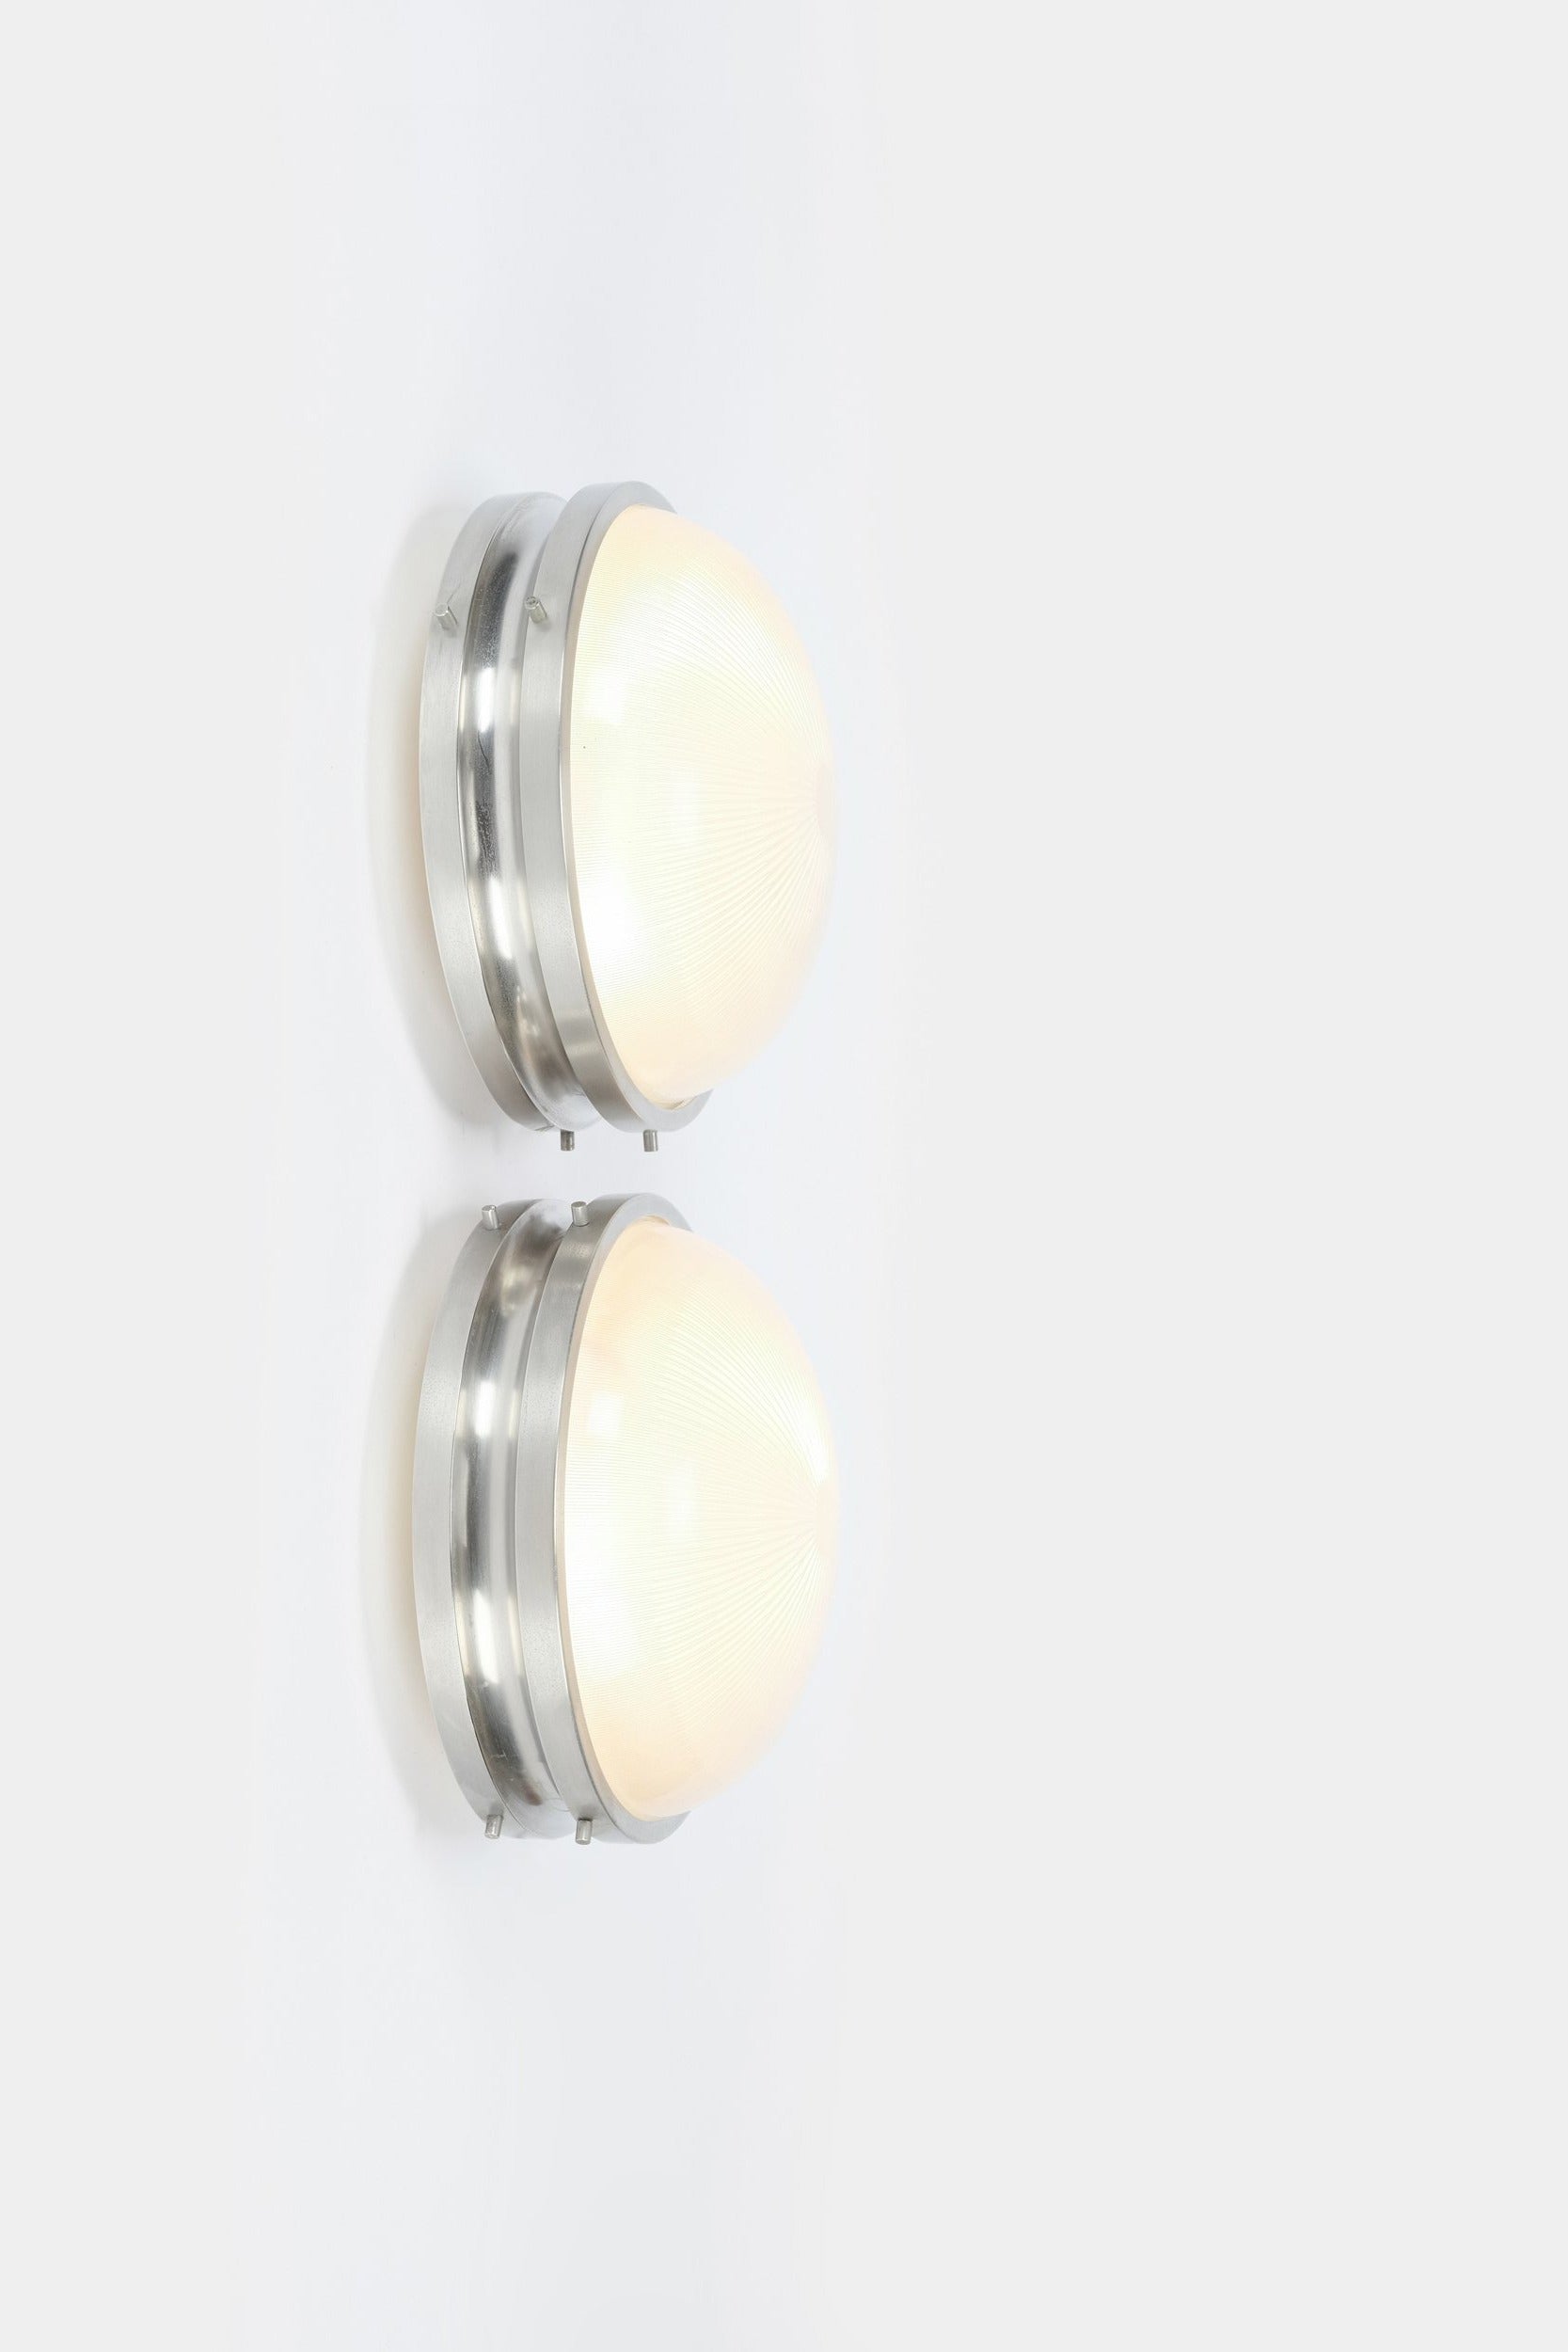 Sergio Mazza Sigma wall lamps pair 50s